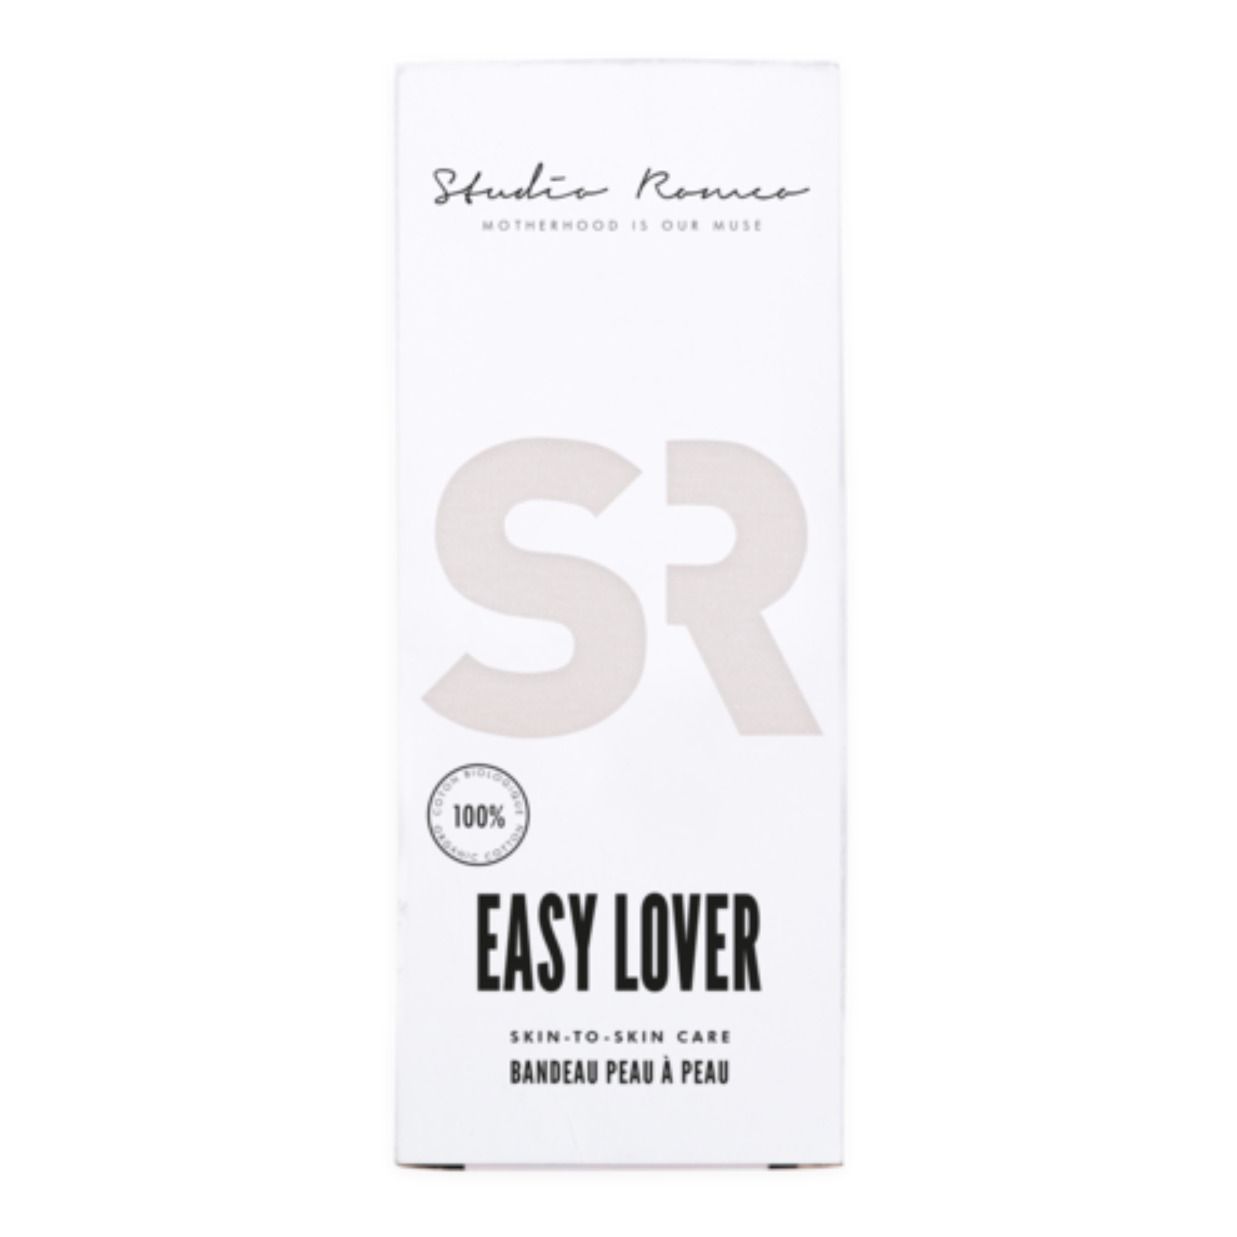 Studio Romeo - Bandeau peau à peau en coton bio Easy Lover - Nude